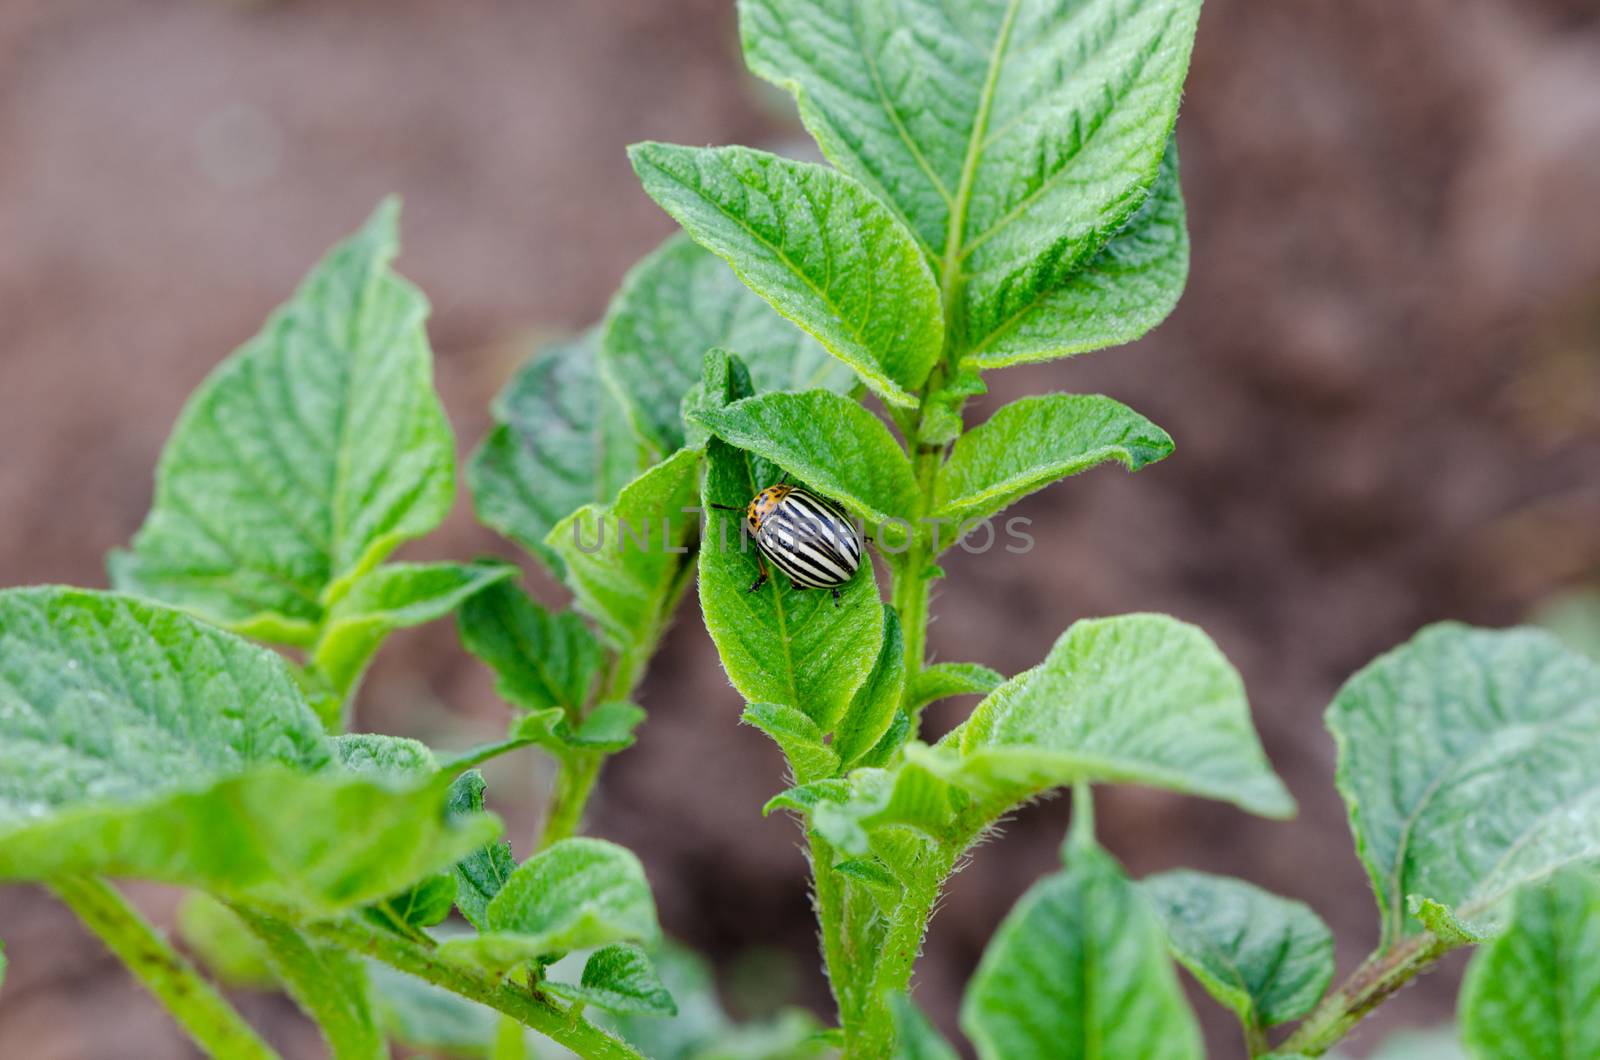 colorado beetle bug move on potato vegetable plant leaves.